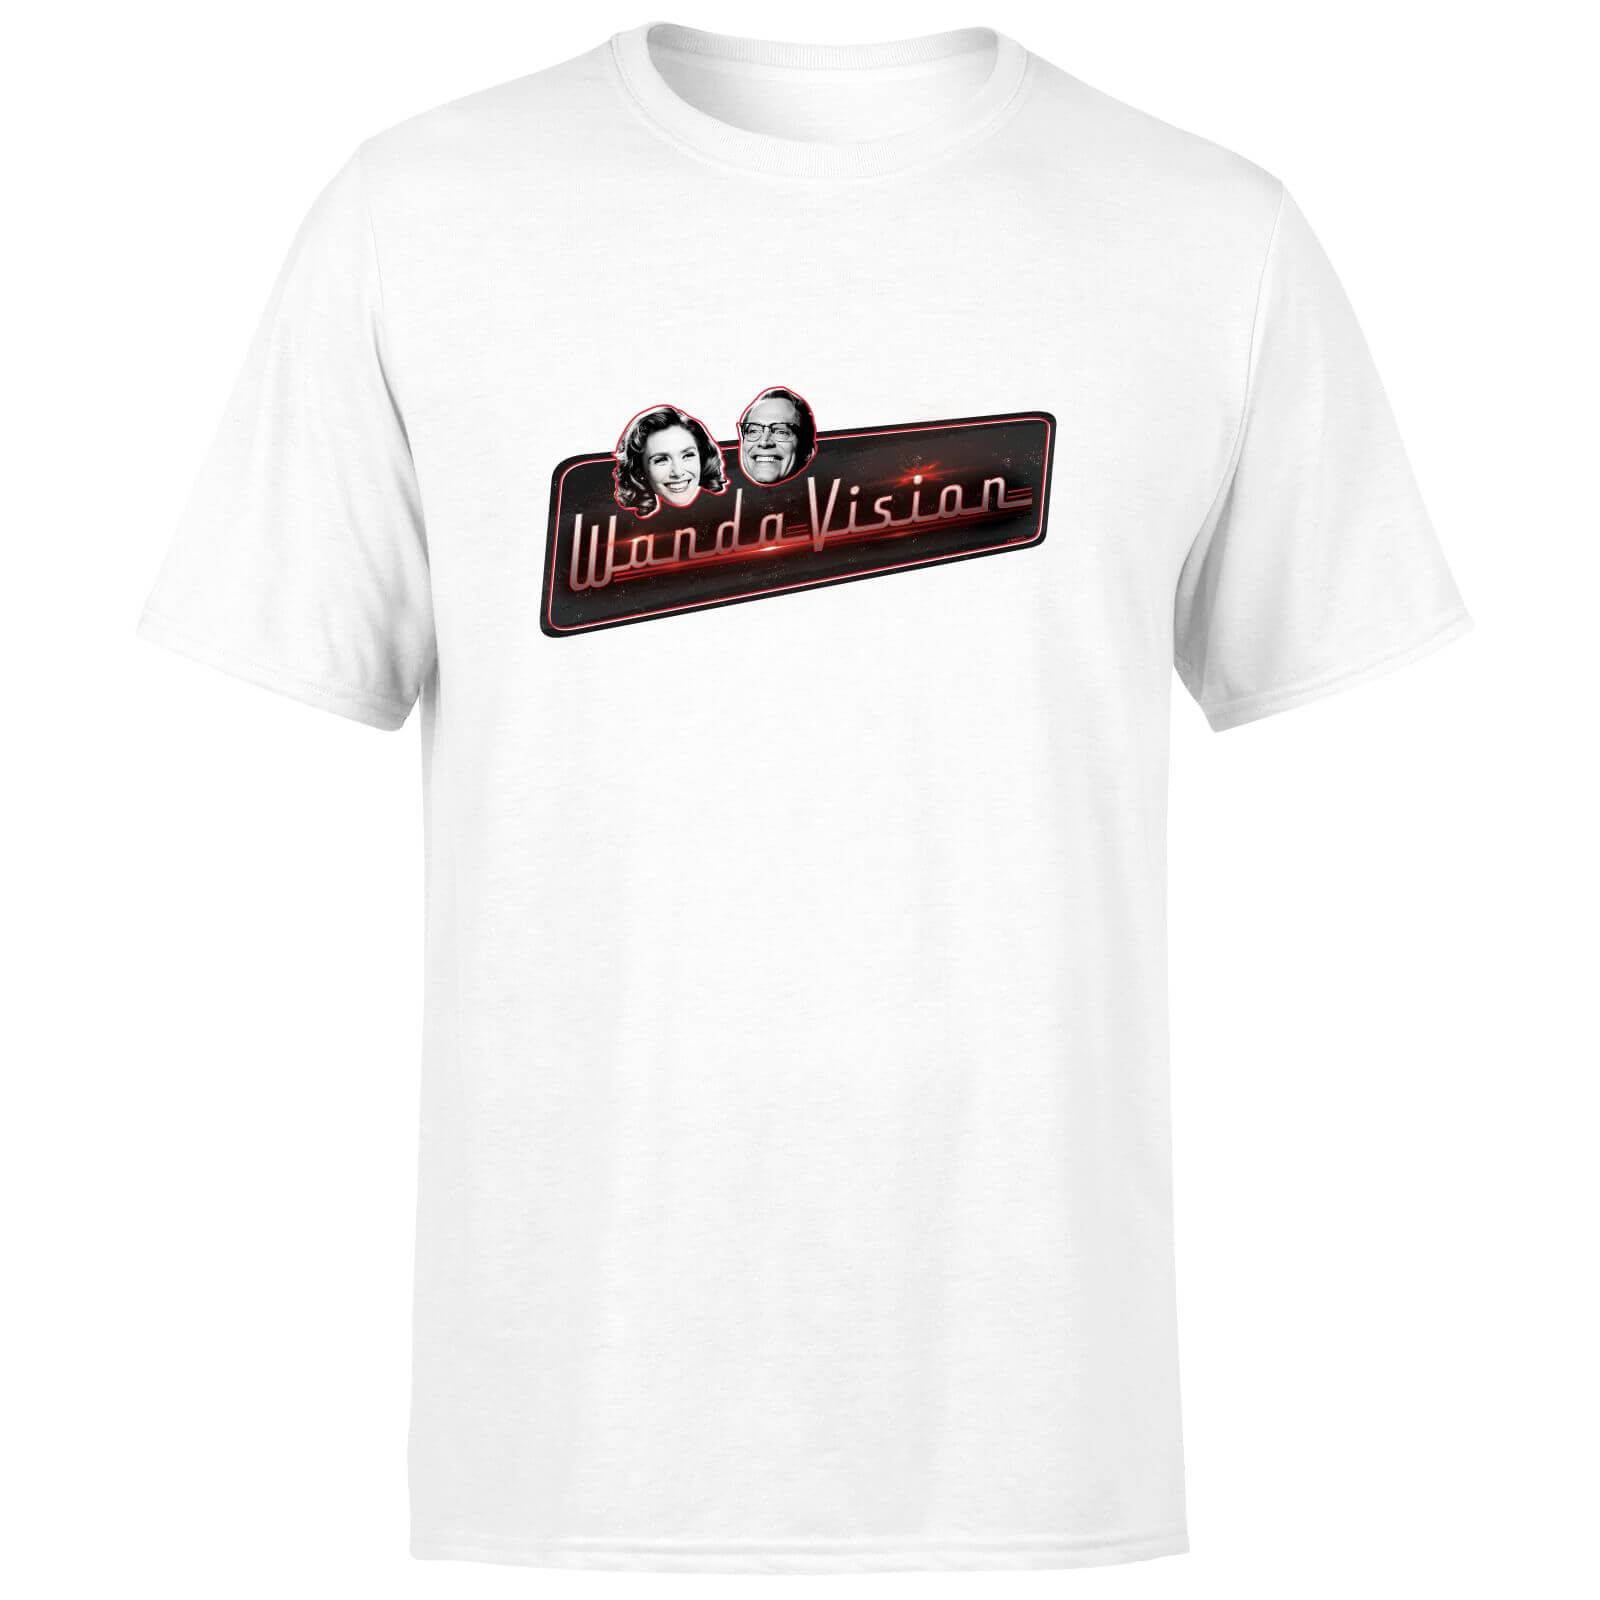 WandaVision Men's T-Shirt - White - S - Weiß